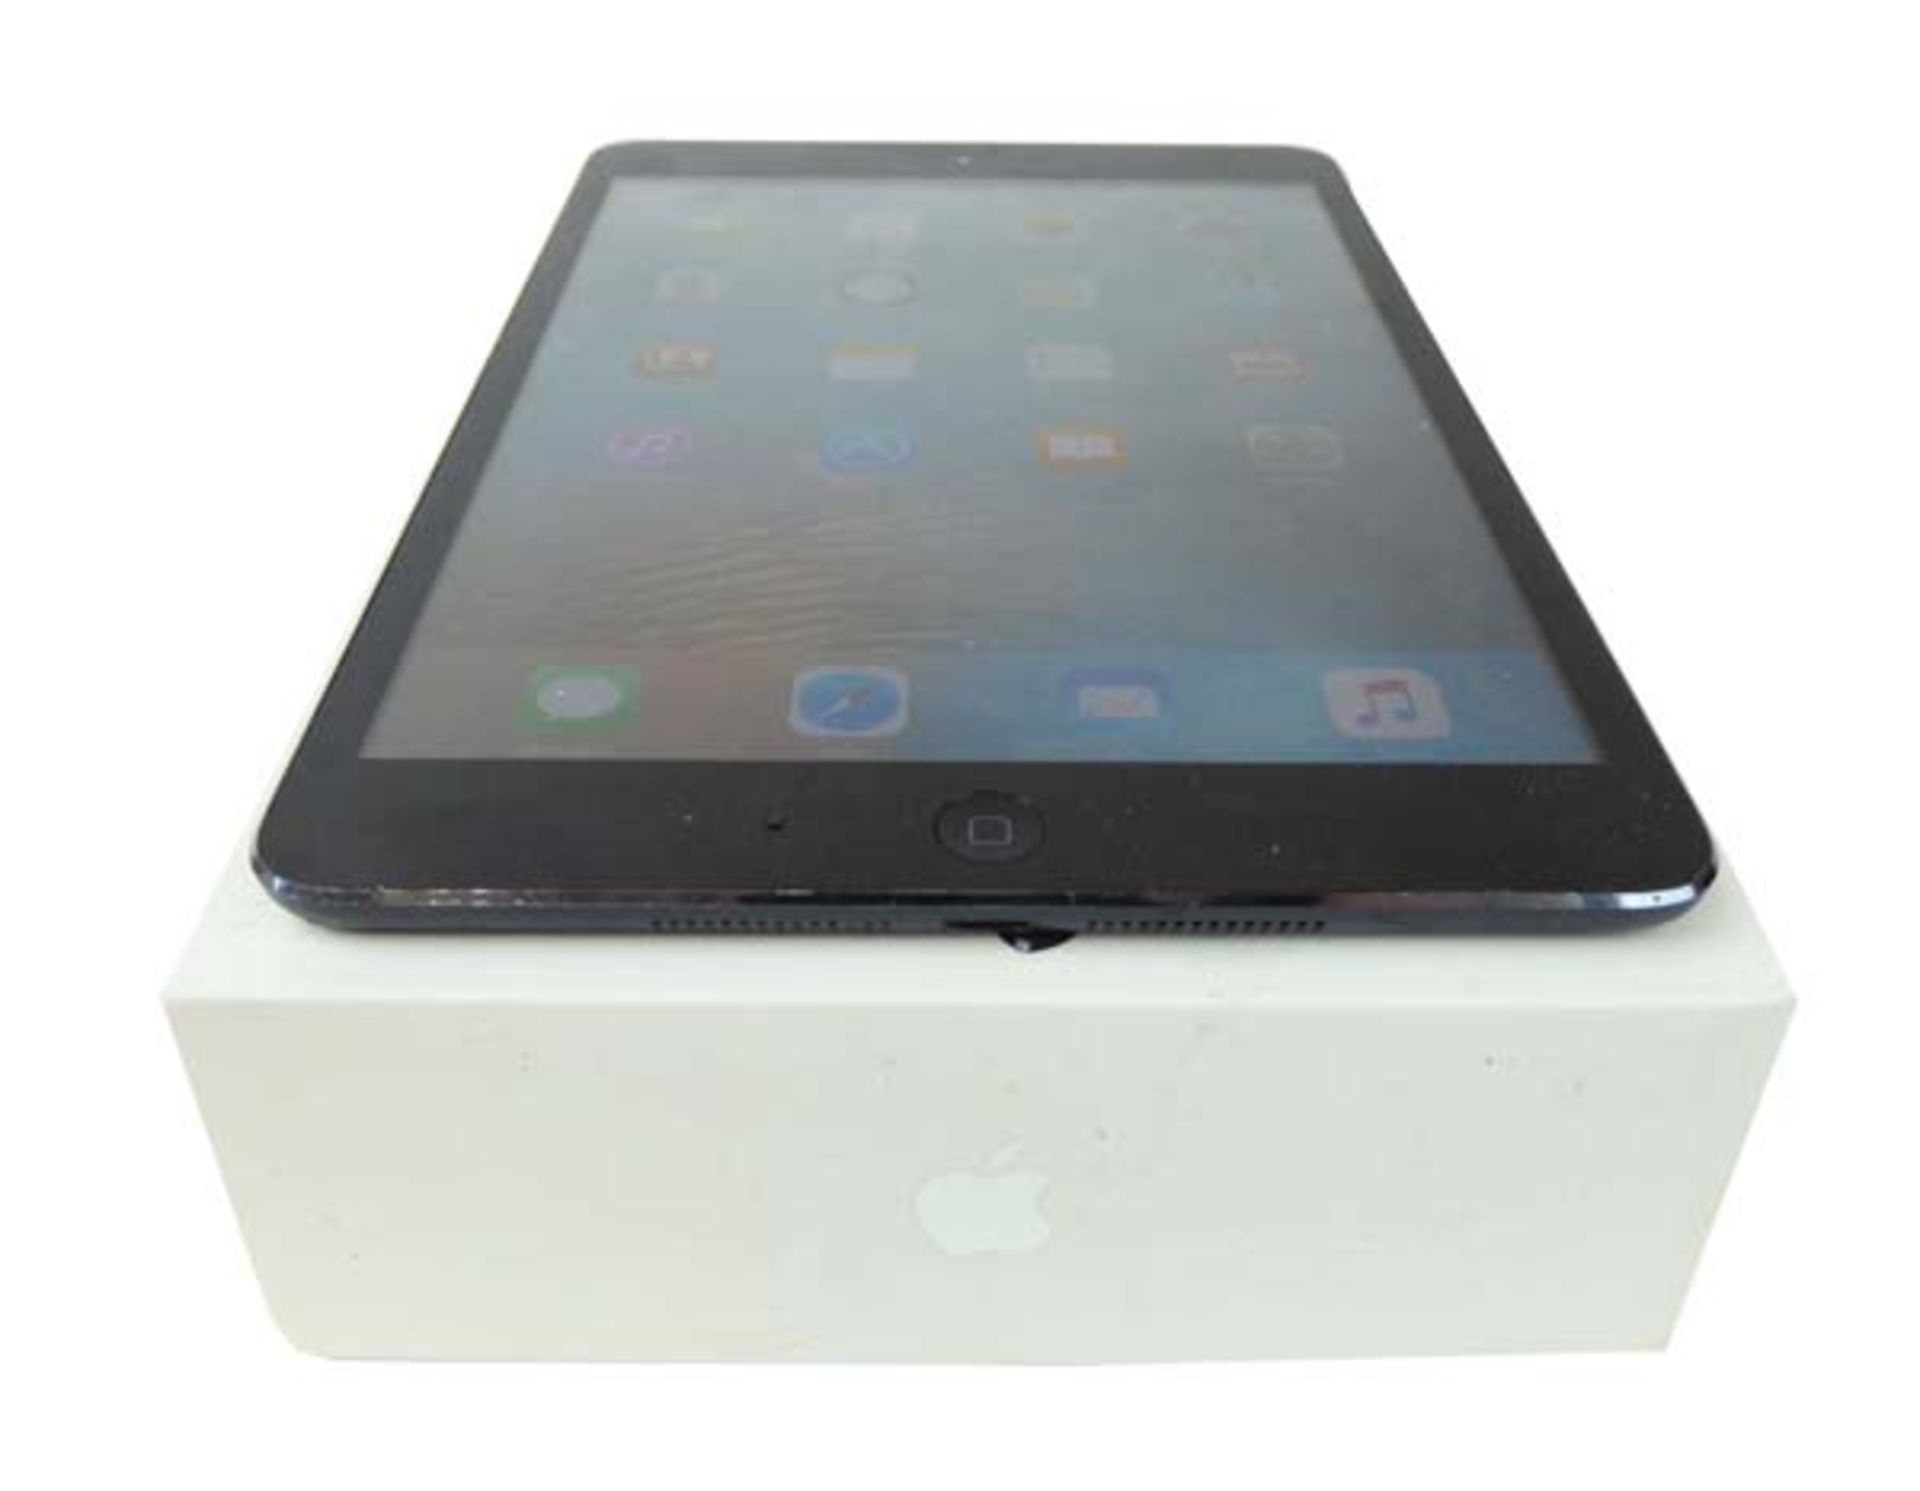 iPad Mini 32GB Black tablet with box (A1432 2012) - Image 2 of 3